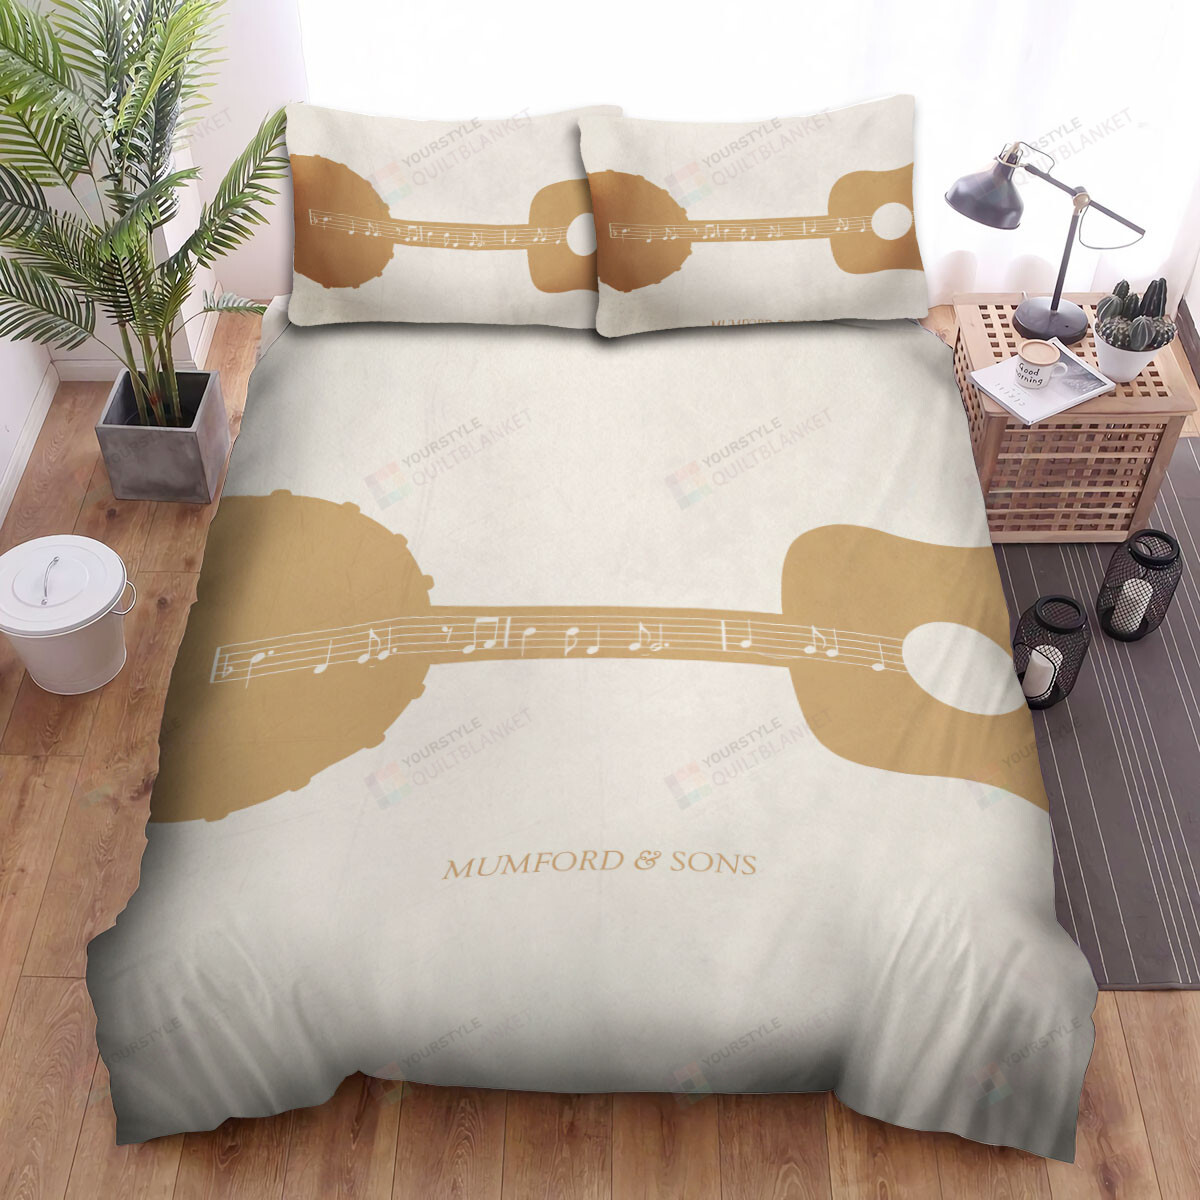 Mumford & Sons Art Guitar Bed Sheets Spread Comforter Duvet Cover Bedding Sets